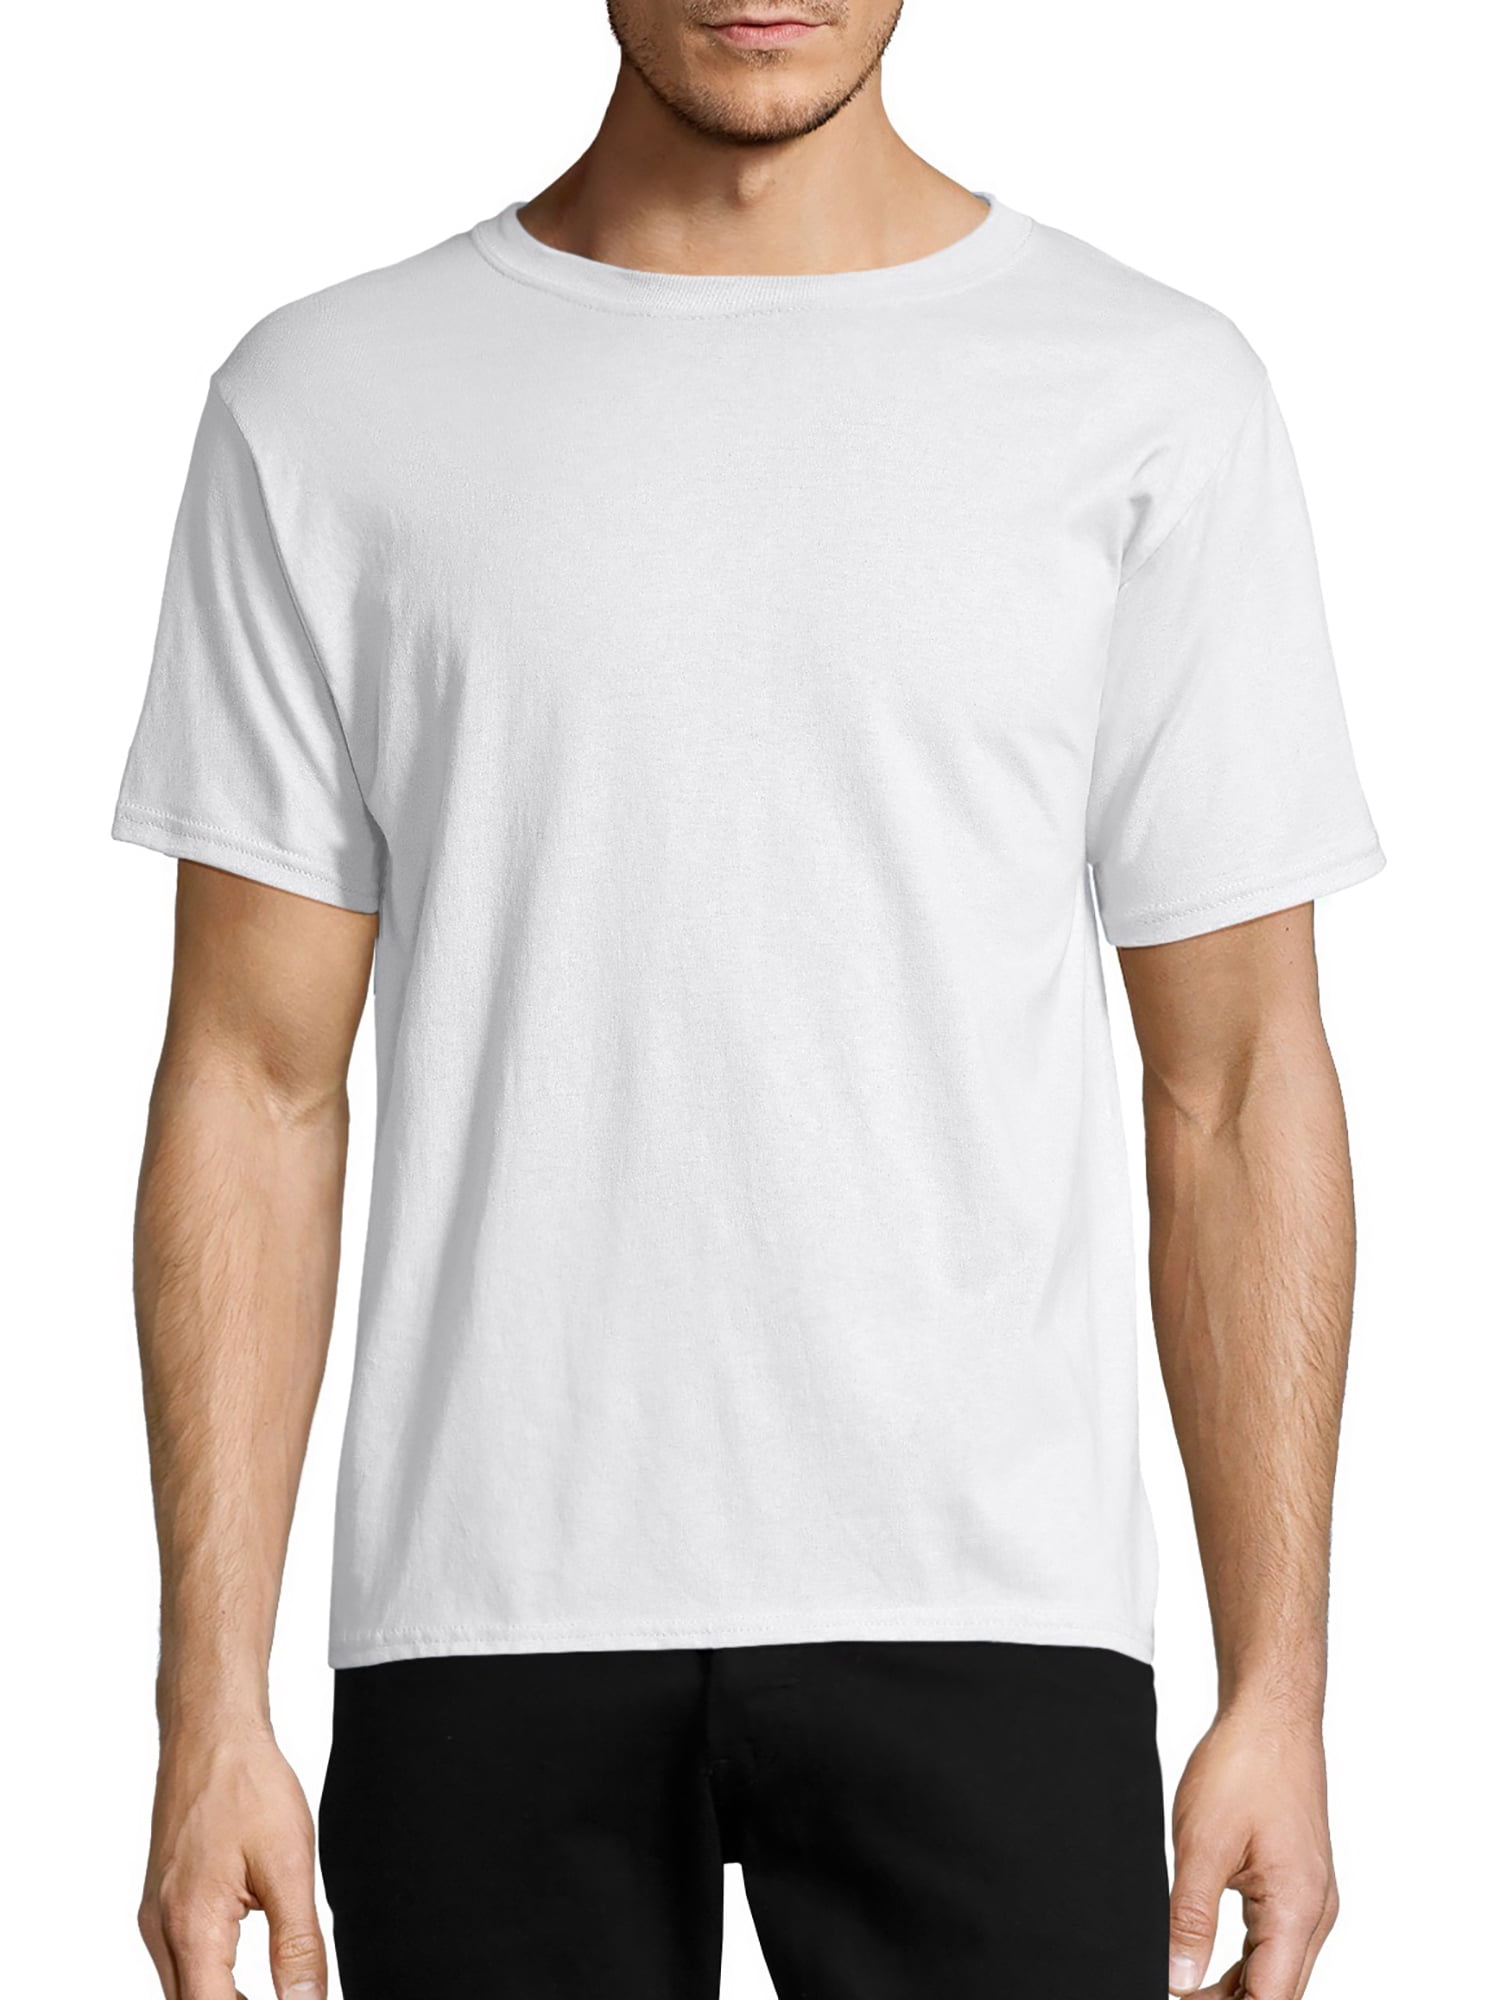 Size Varies Hanes Authentic Men's Plain Crewneck Short Sleeve Tagless T-Shirt